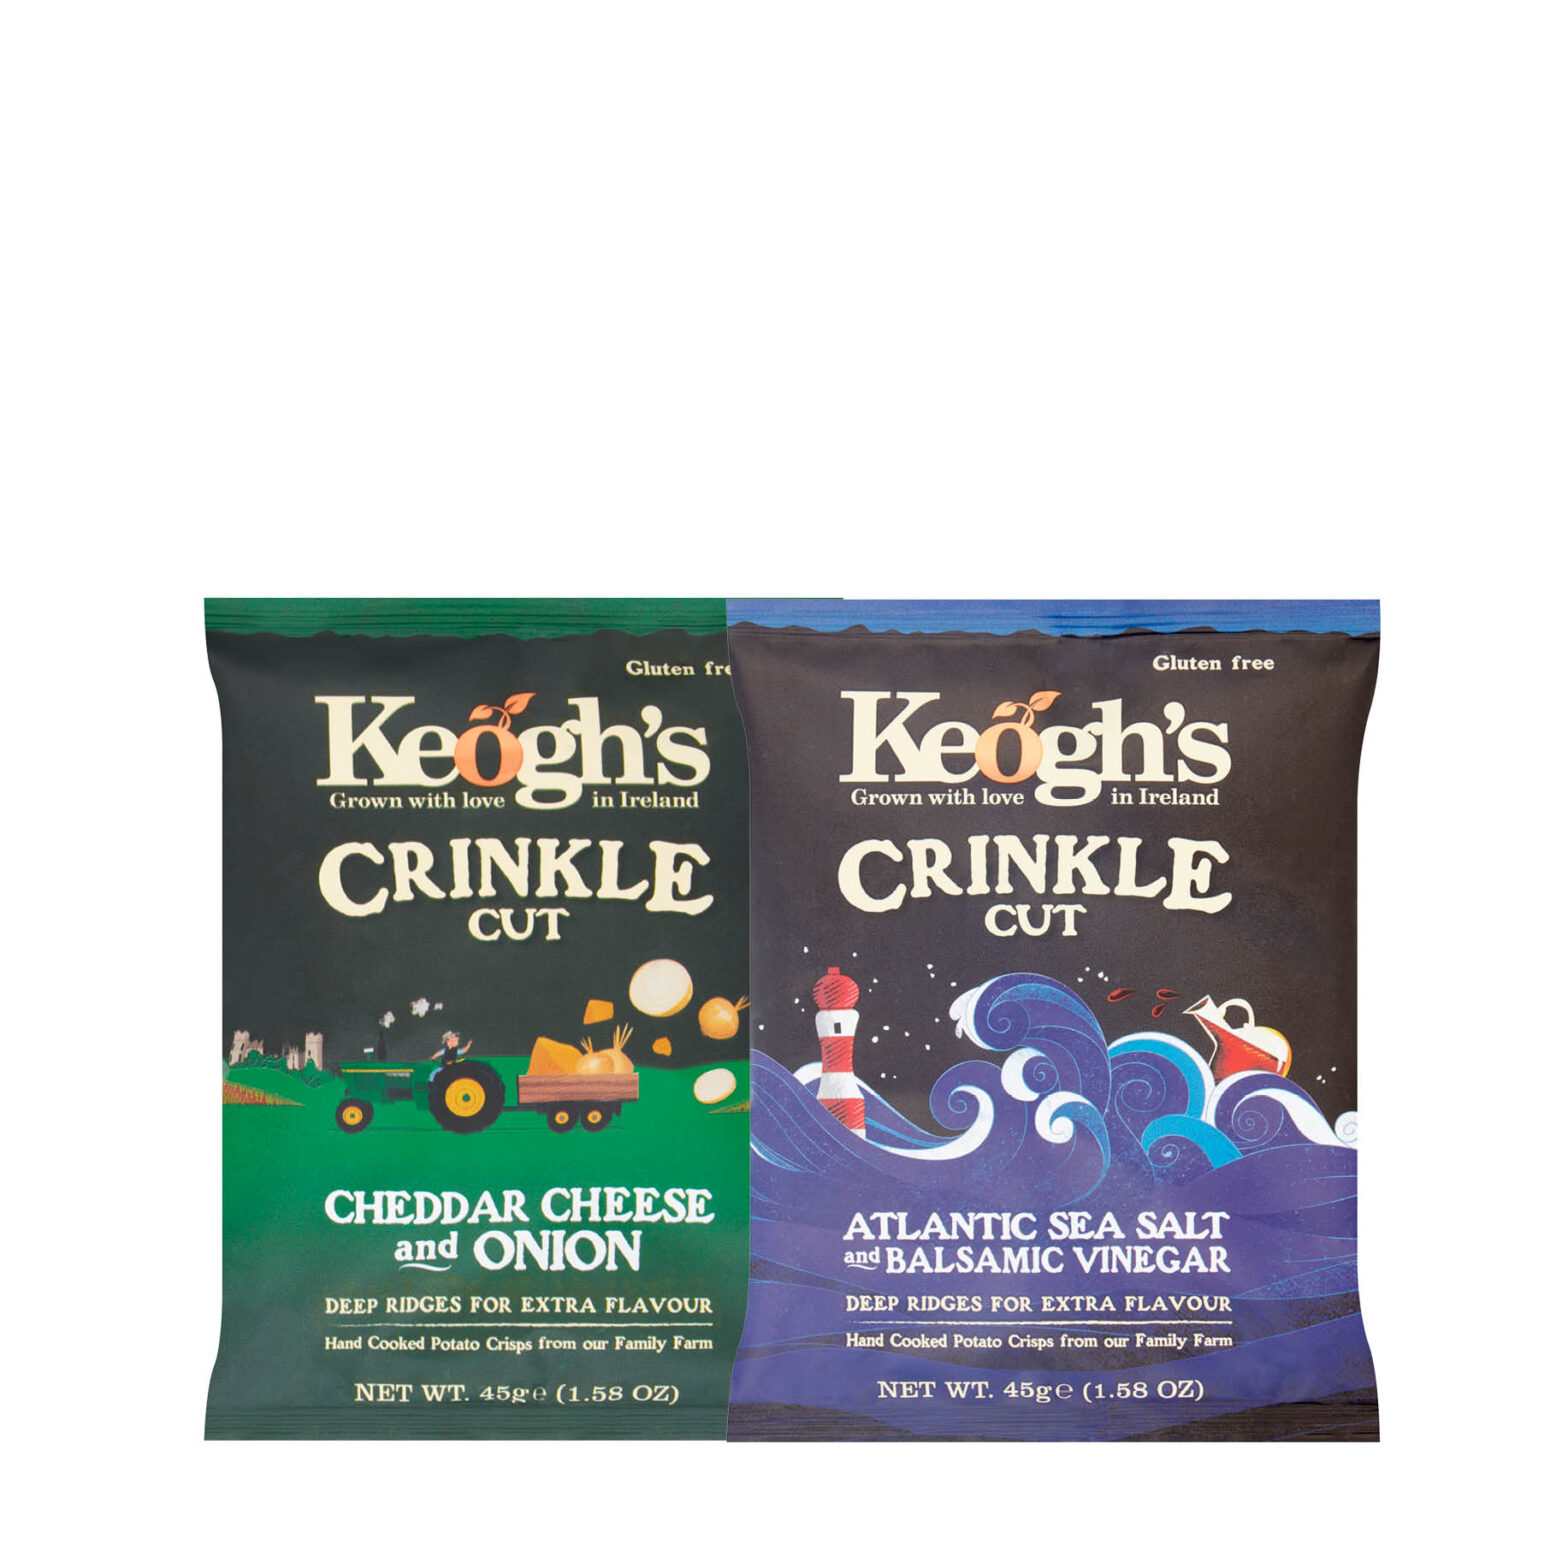 Keogh’s Crinkle Irish Cheddar Cheese & Onion Crisps / Keogh’s Crinkle Atlantic Sea Salt & Balsamic Vinegar Crisps